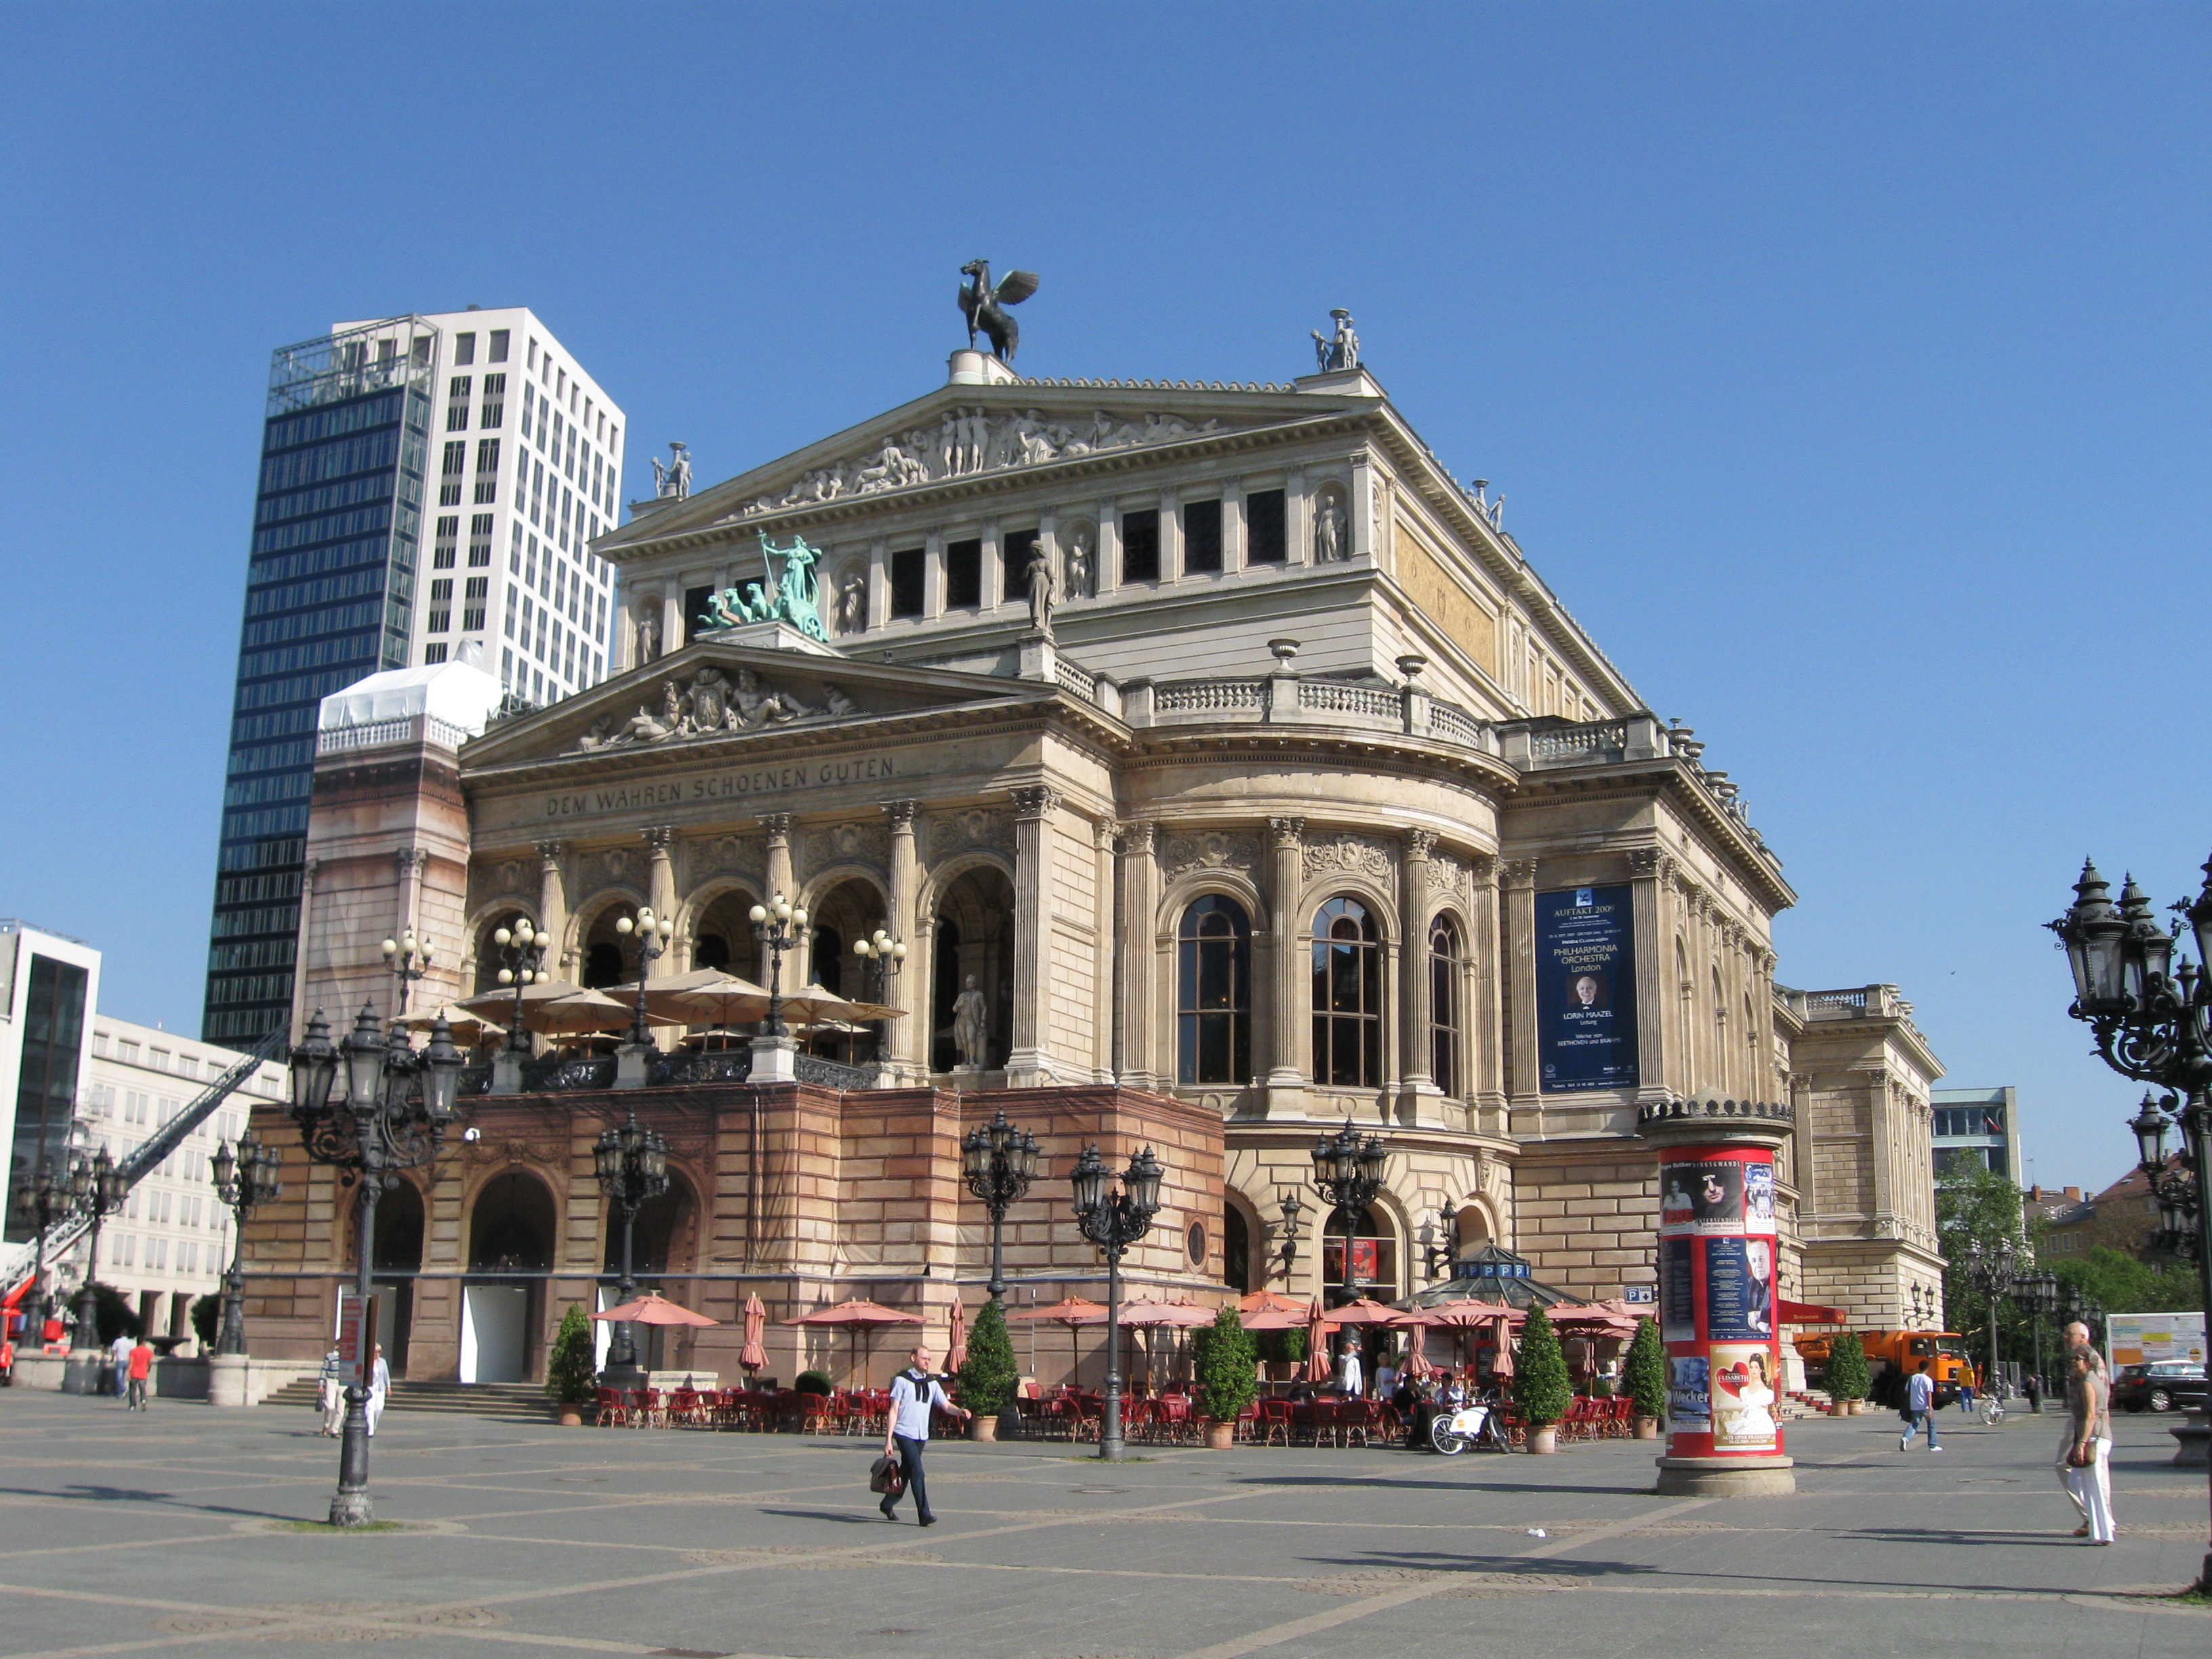 Alte Oper on Opernplatz, the Frankfurt Opera House.